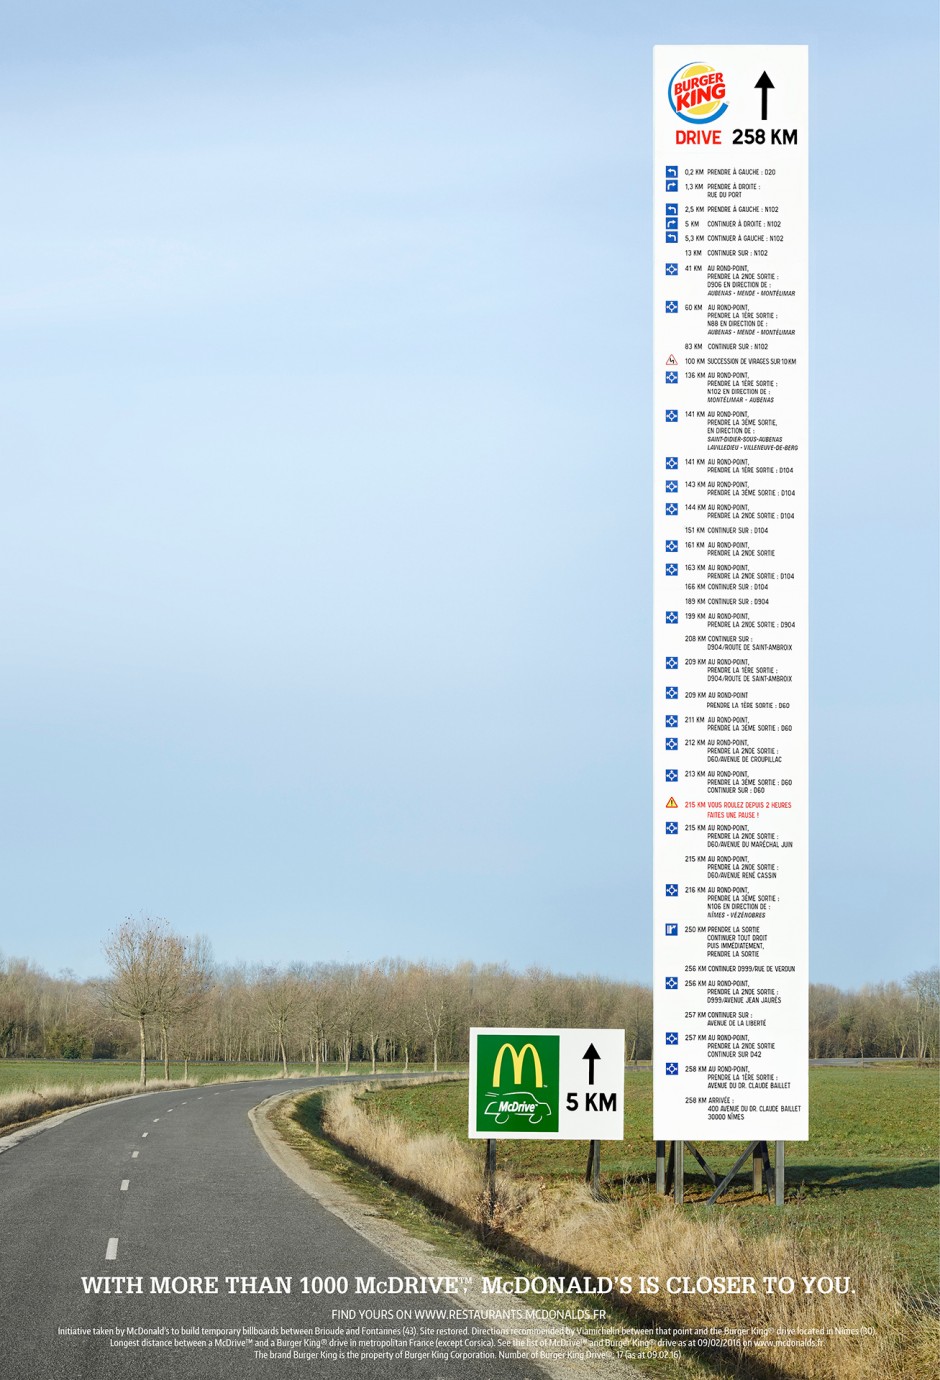 Burger King responds to McDonald's billboards